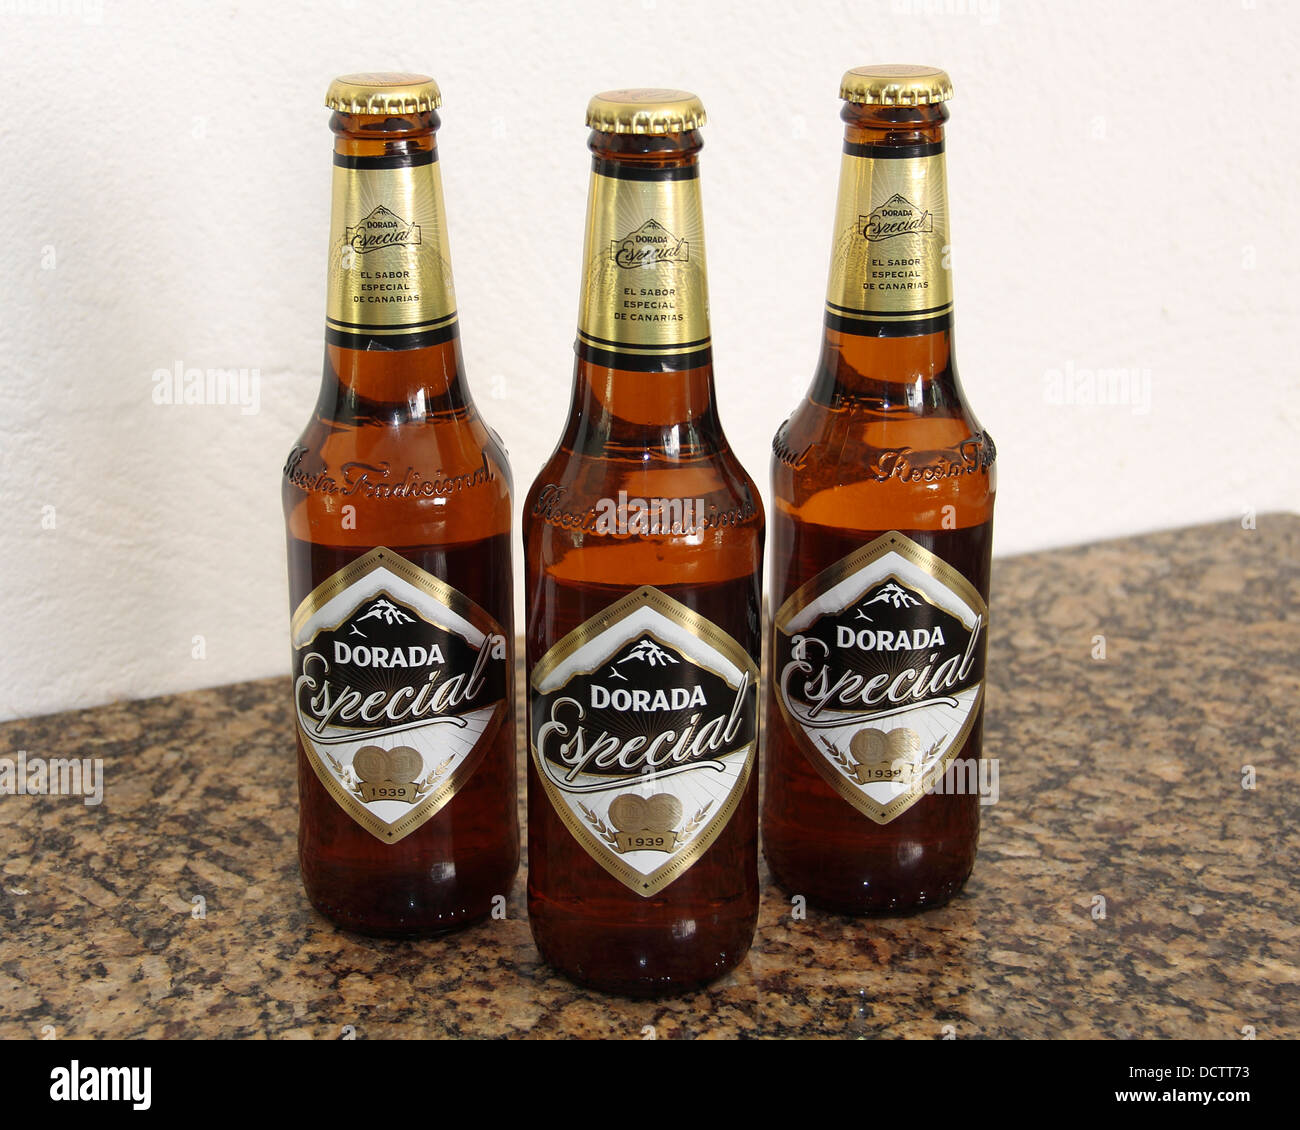 Dorada Especial, Bier, gebraut in Teneriffa, Kanarische Inseln  Stockfotografie - Alamy